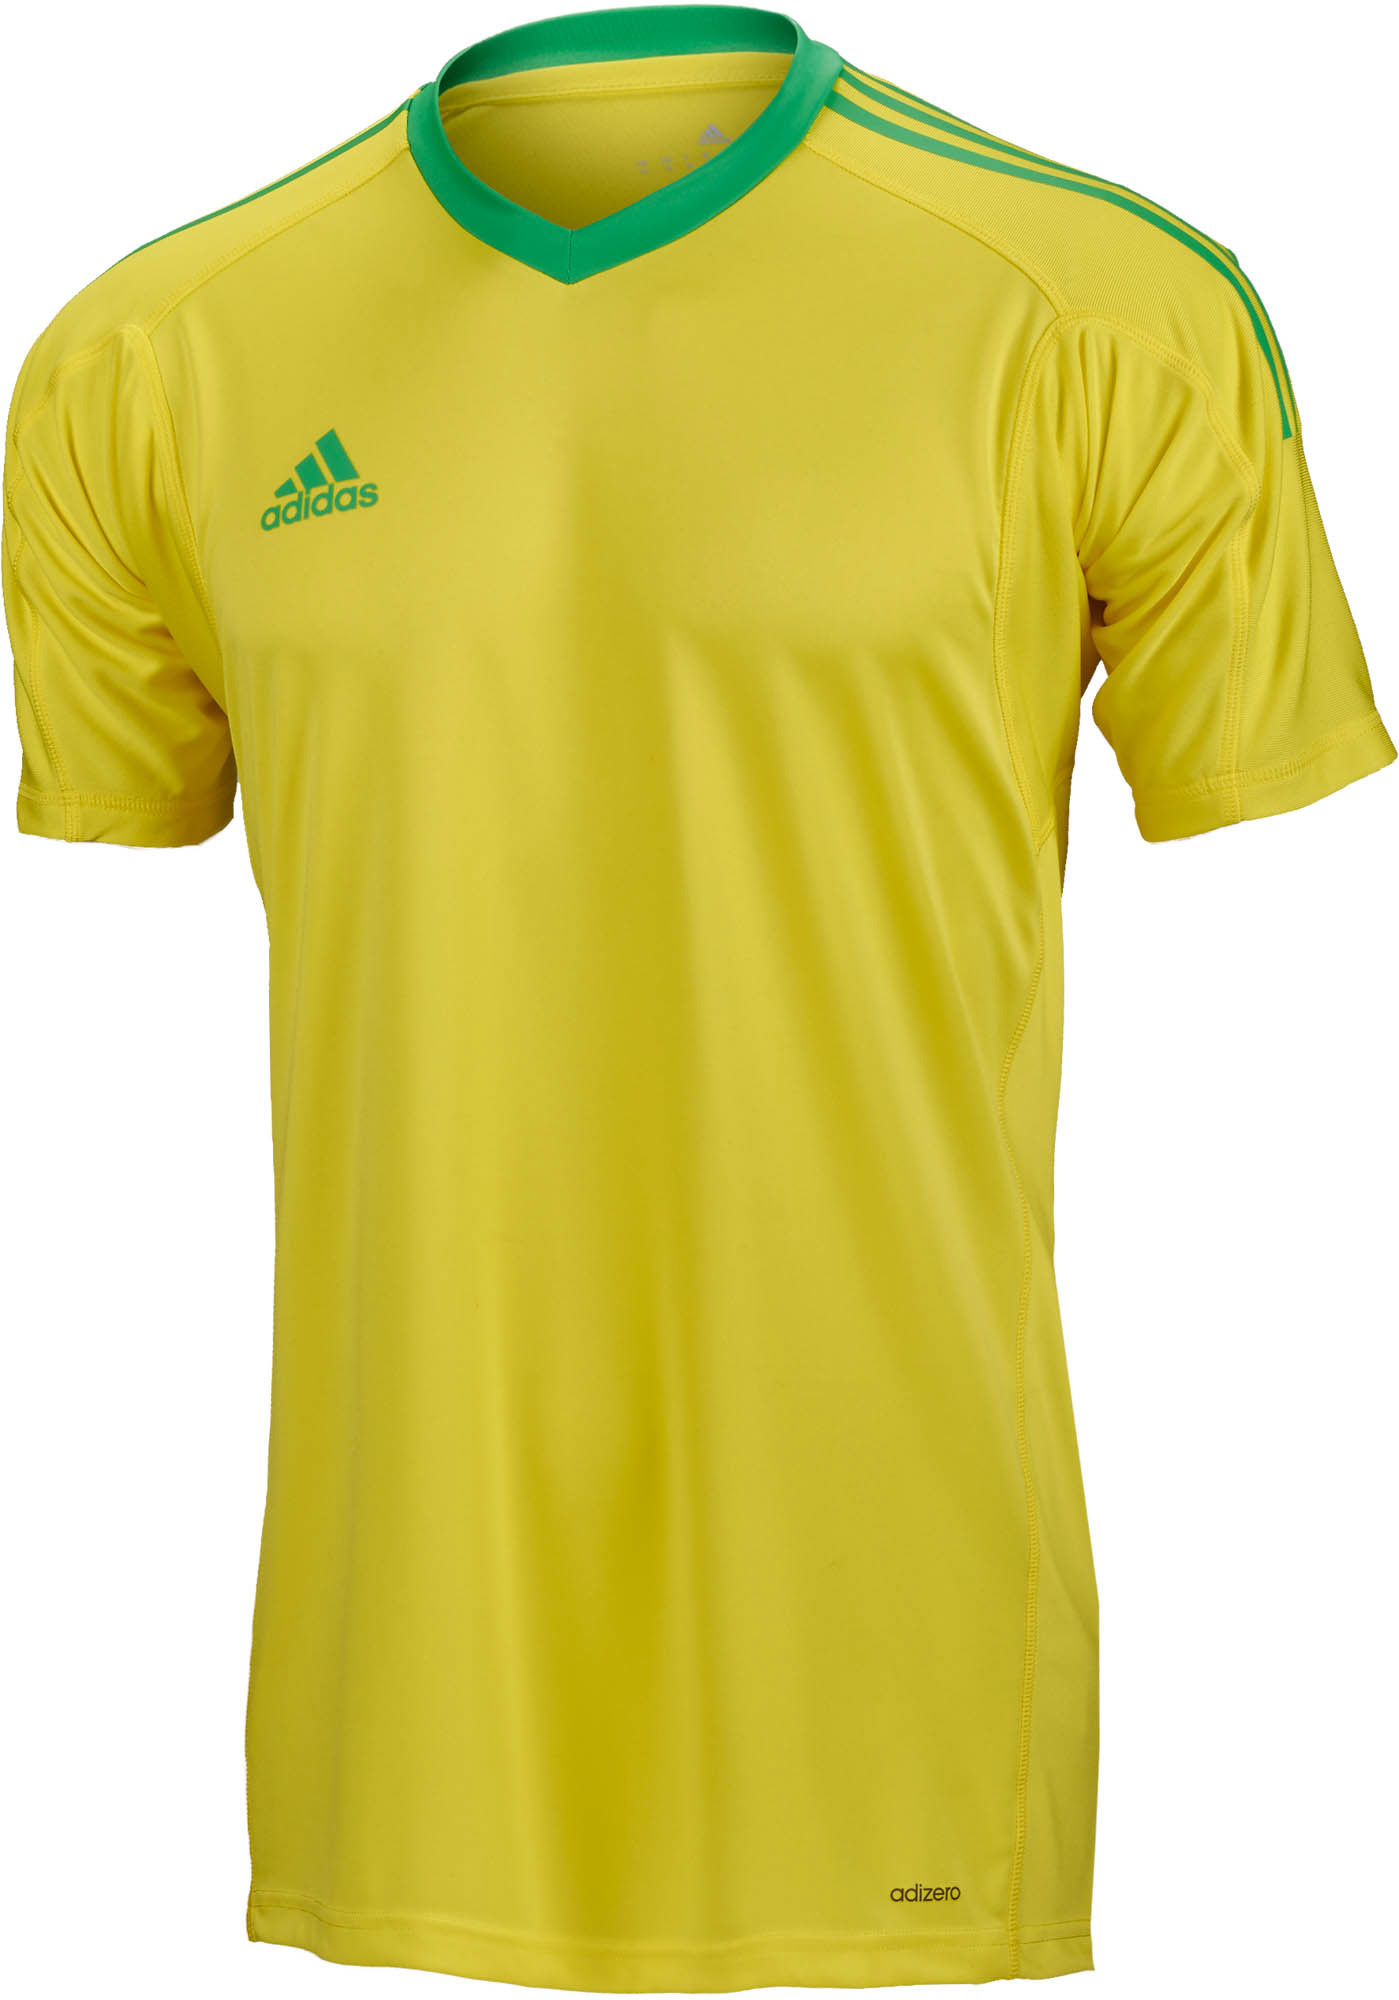 yellow green jersey